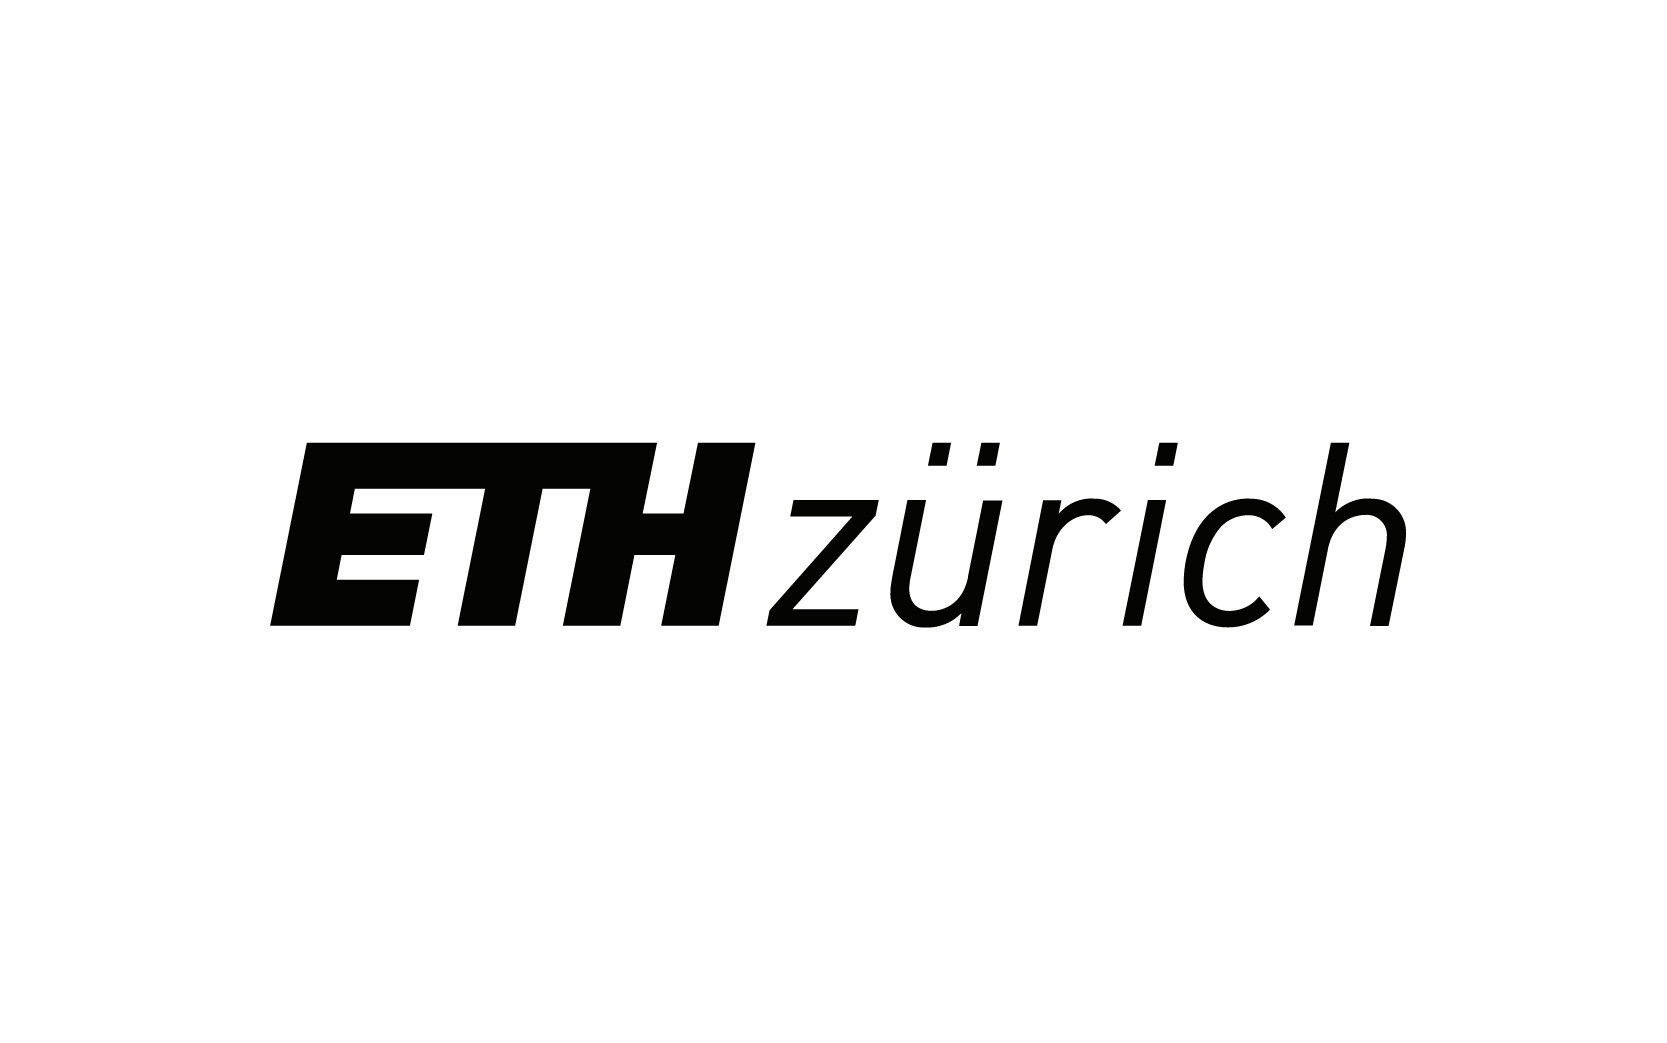 ETHzurich